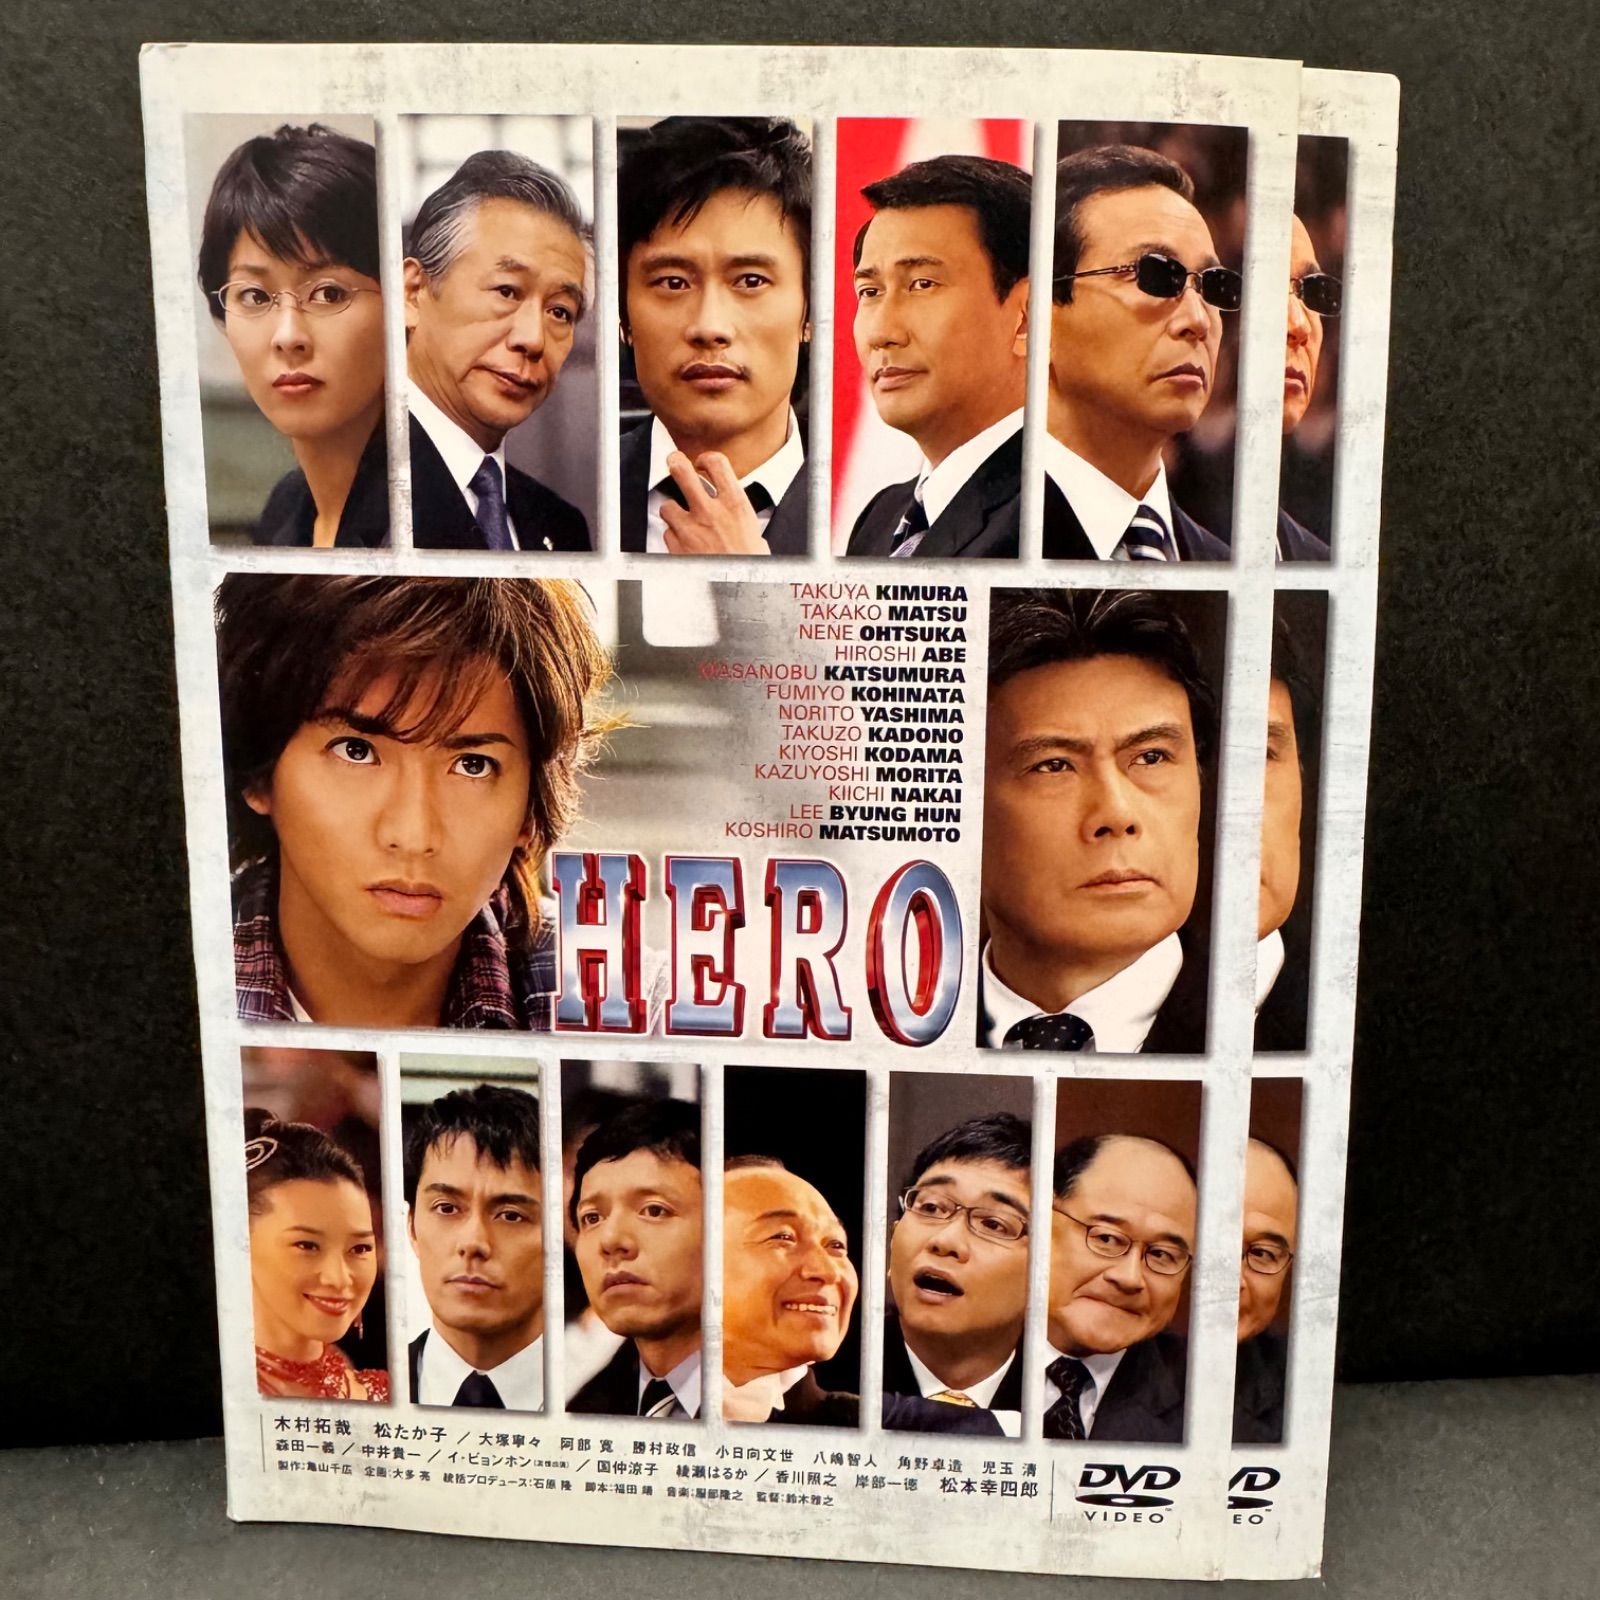 劇場版 HERO ヒーロー DVD 木村拓哉/松たか子/大塚寧々/阿部寛/森田 